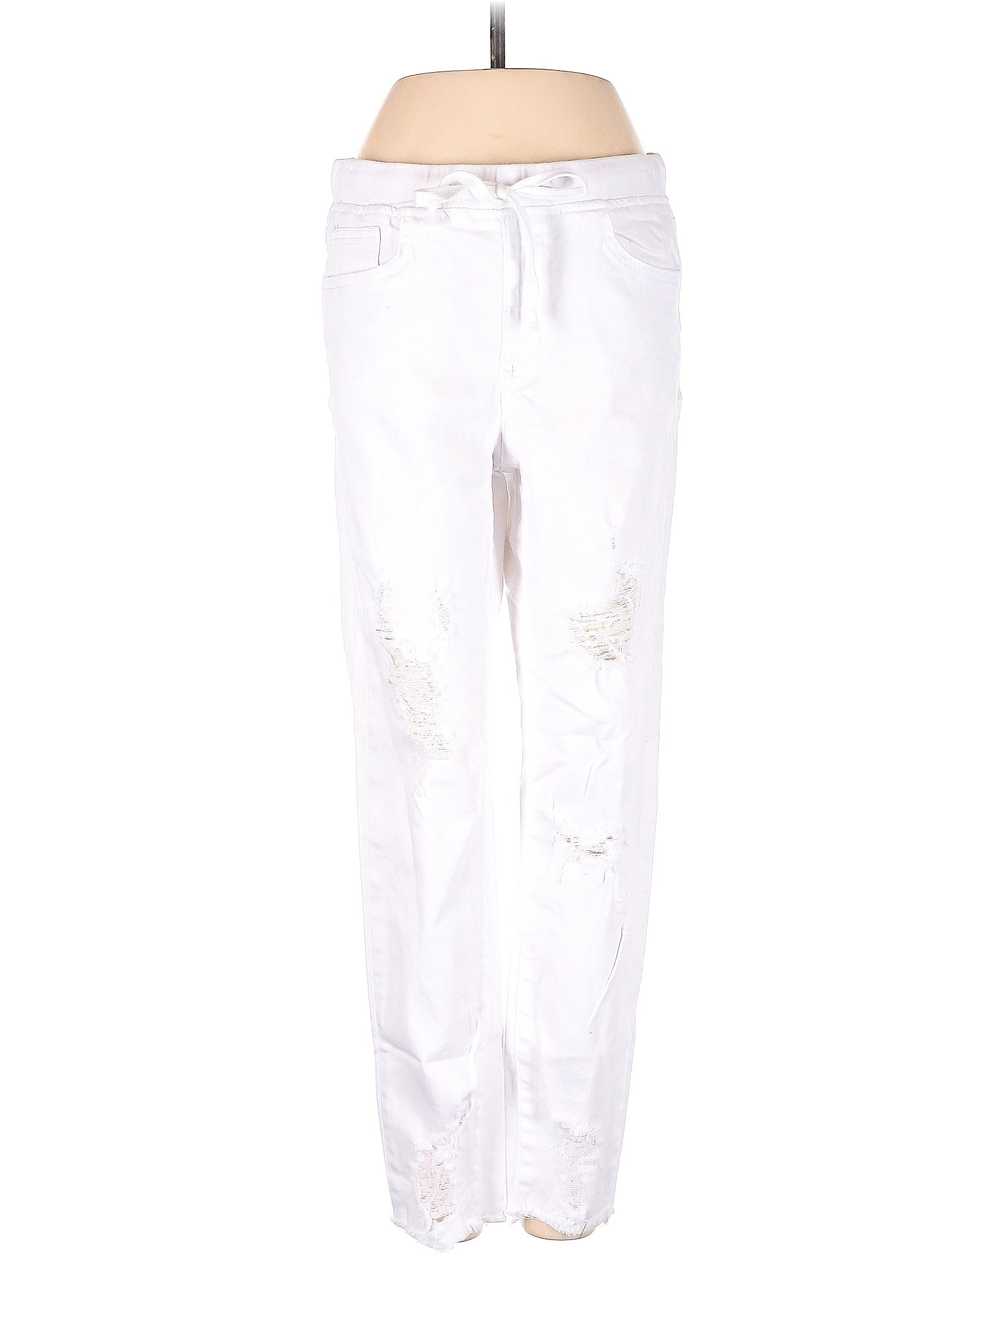 YMI Women White Jeans S - image 1